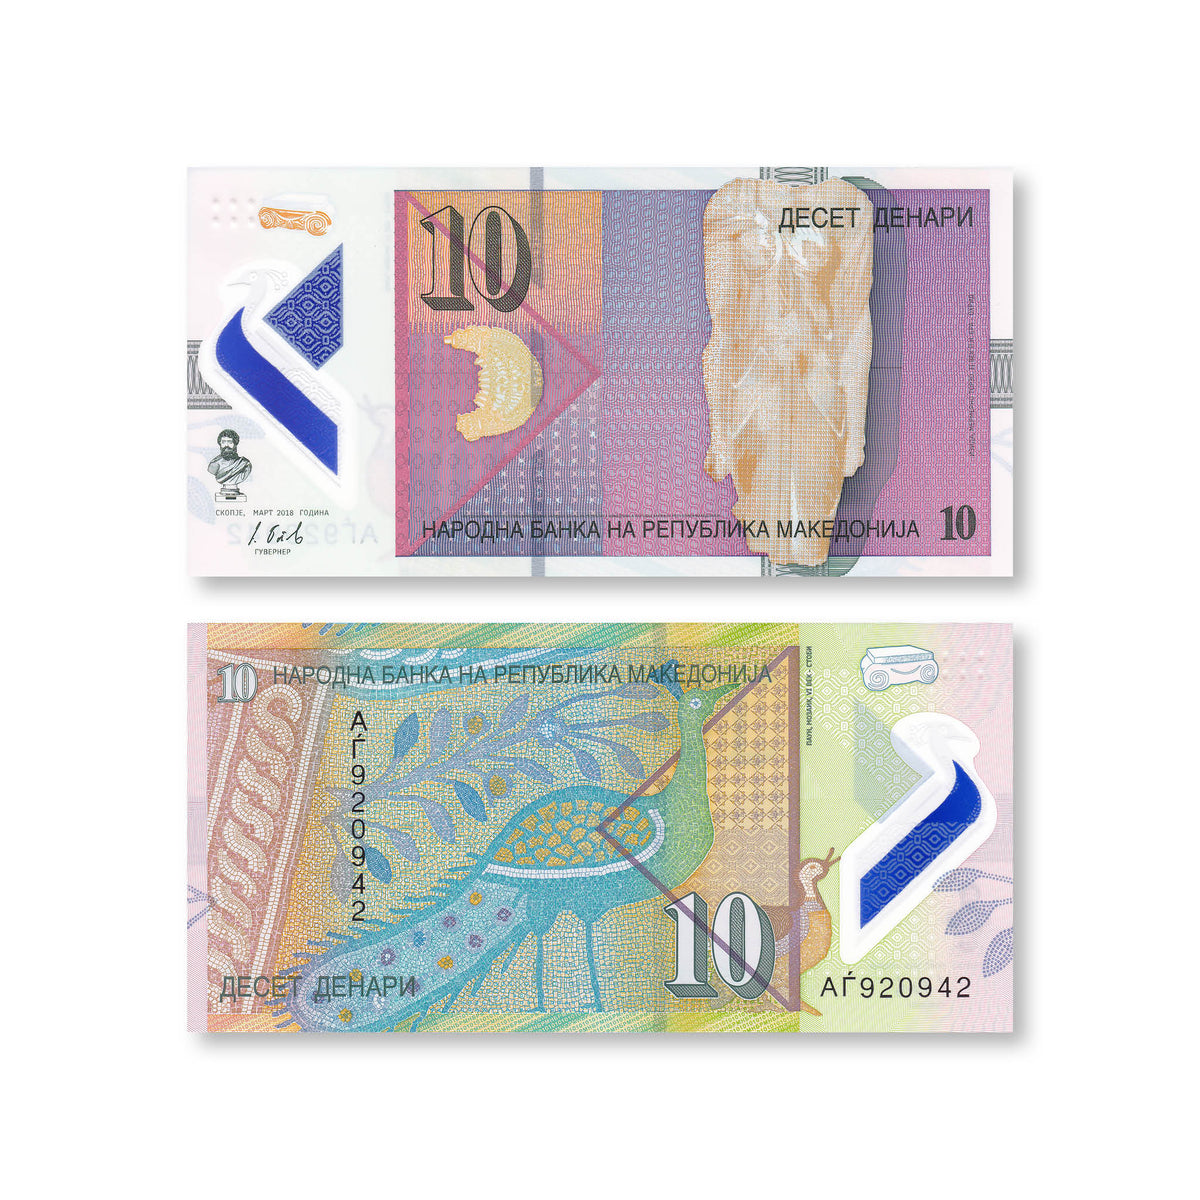 Macedonia 10 Denari, 2018, B217a, P25, UNC - Robert's World Money - World Banknotes